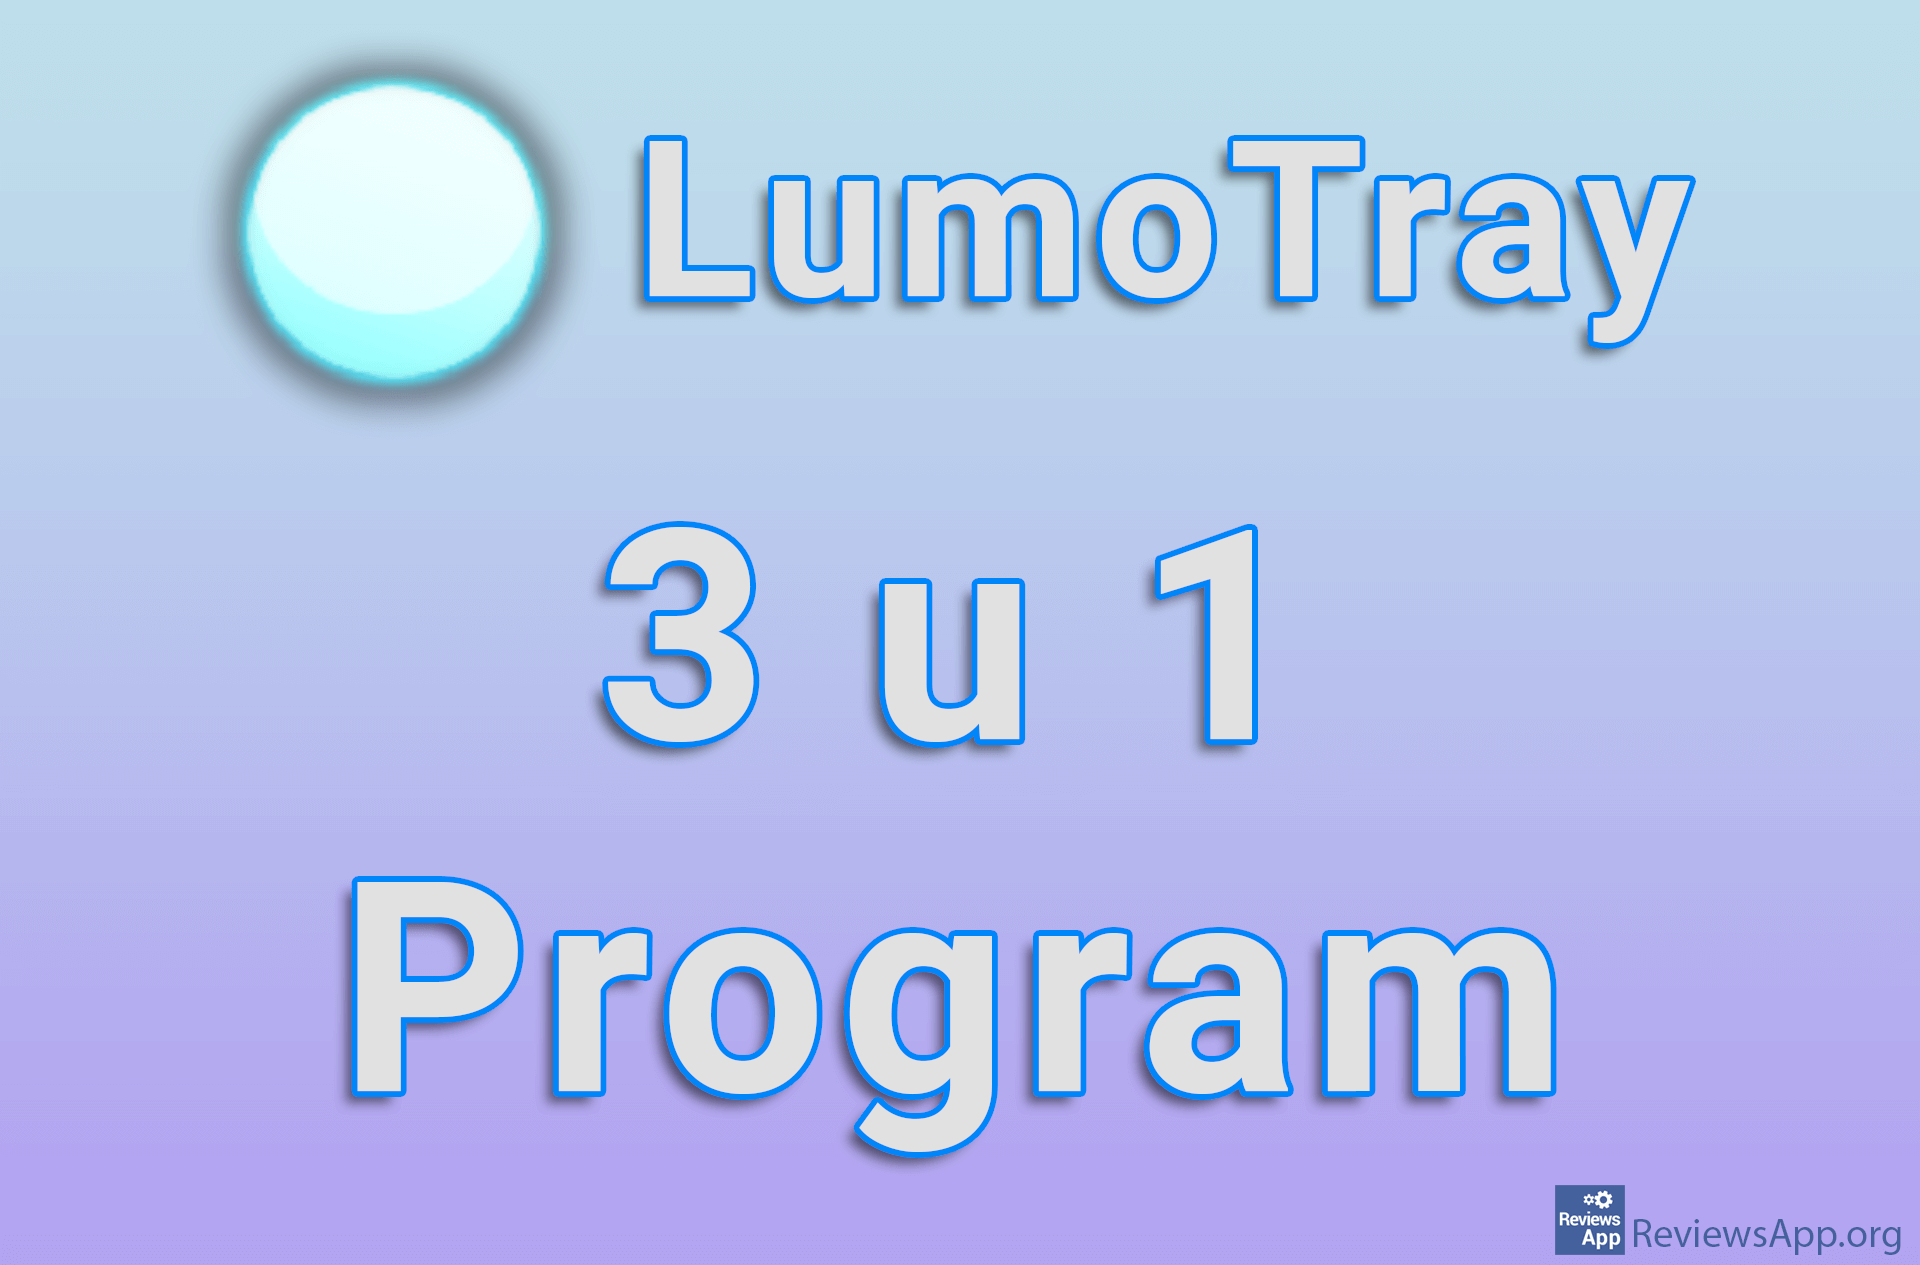 LumoTray – 3 in 1 Program